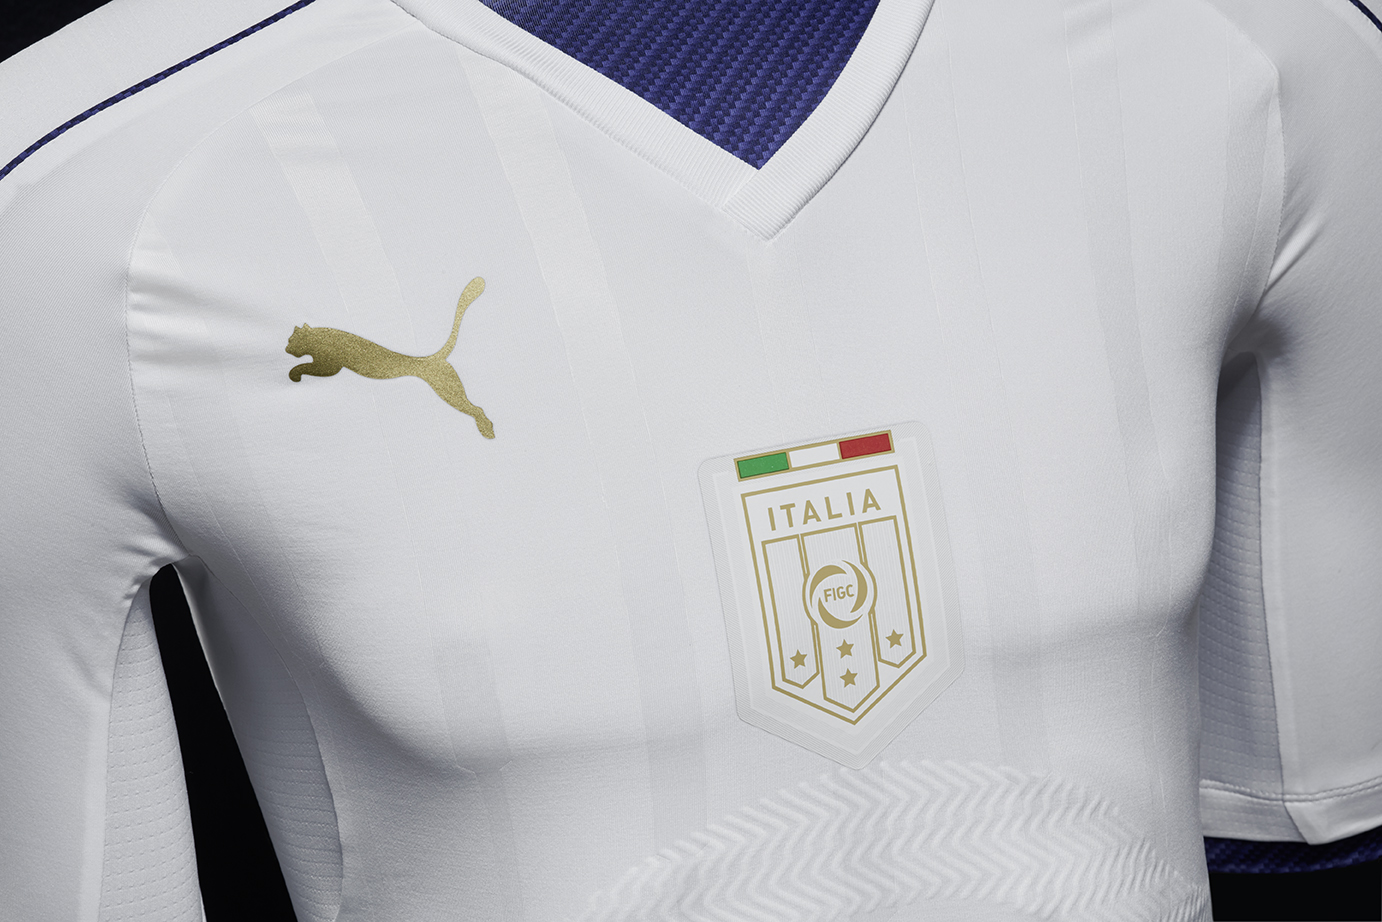 nouveau maillot blanc italie 2016 football